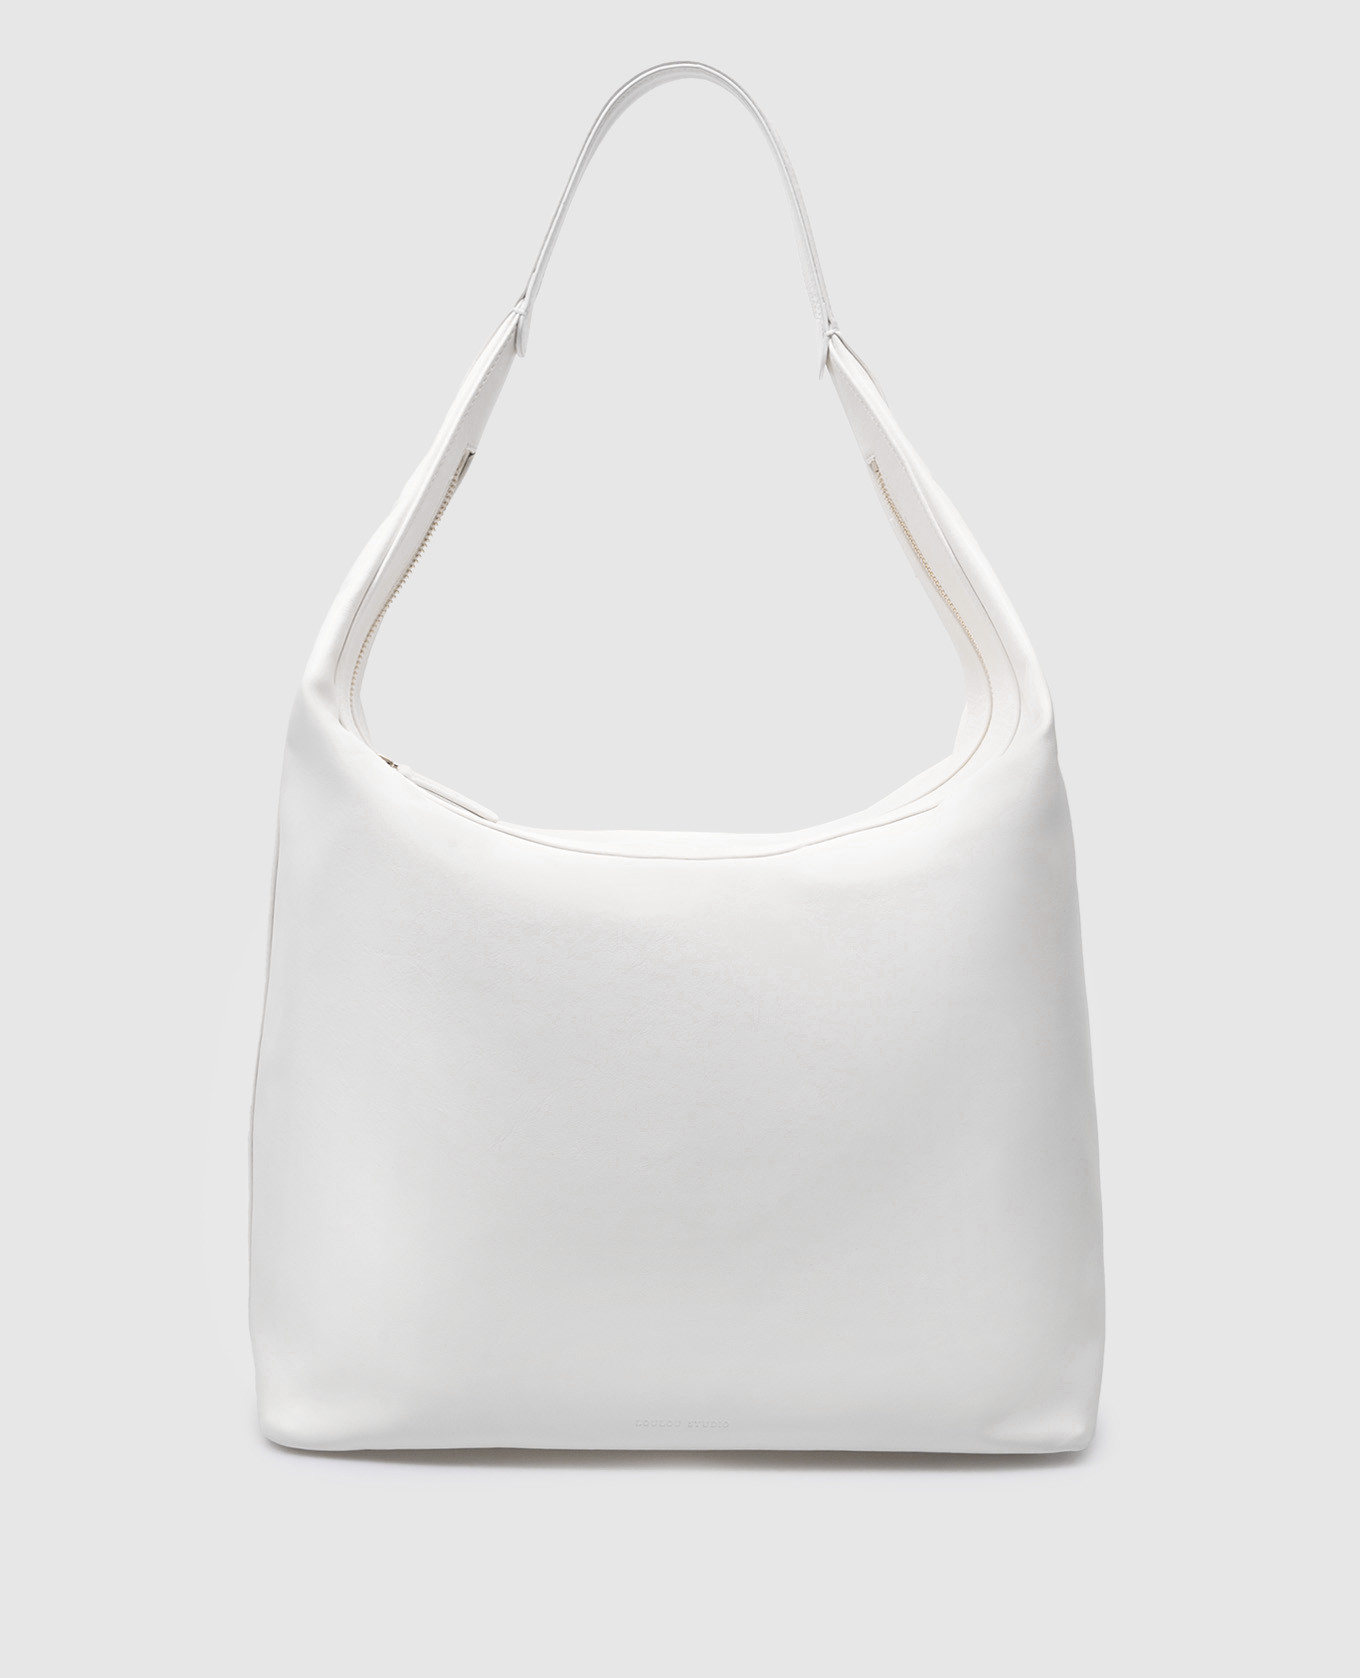 MILA logo white leather hobo bag